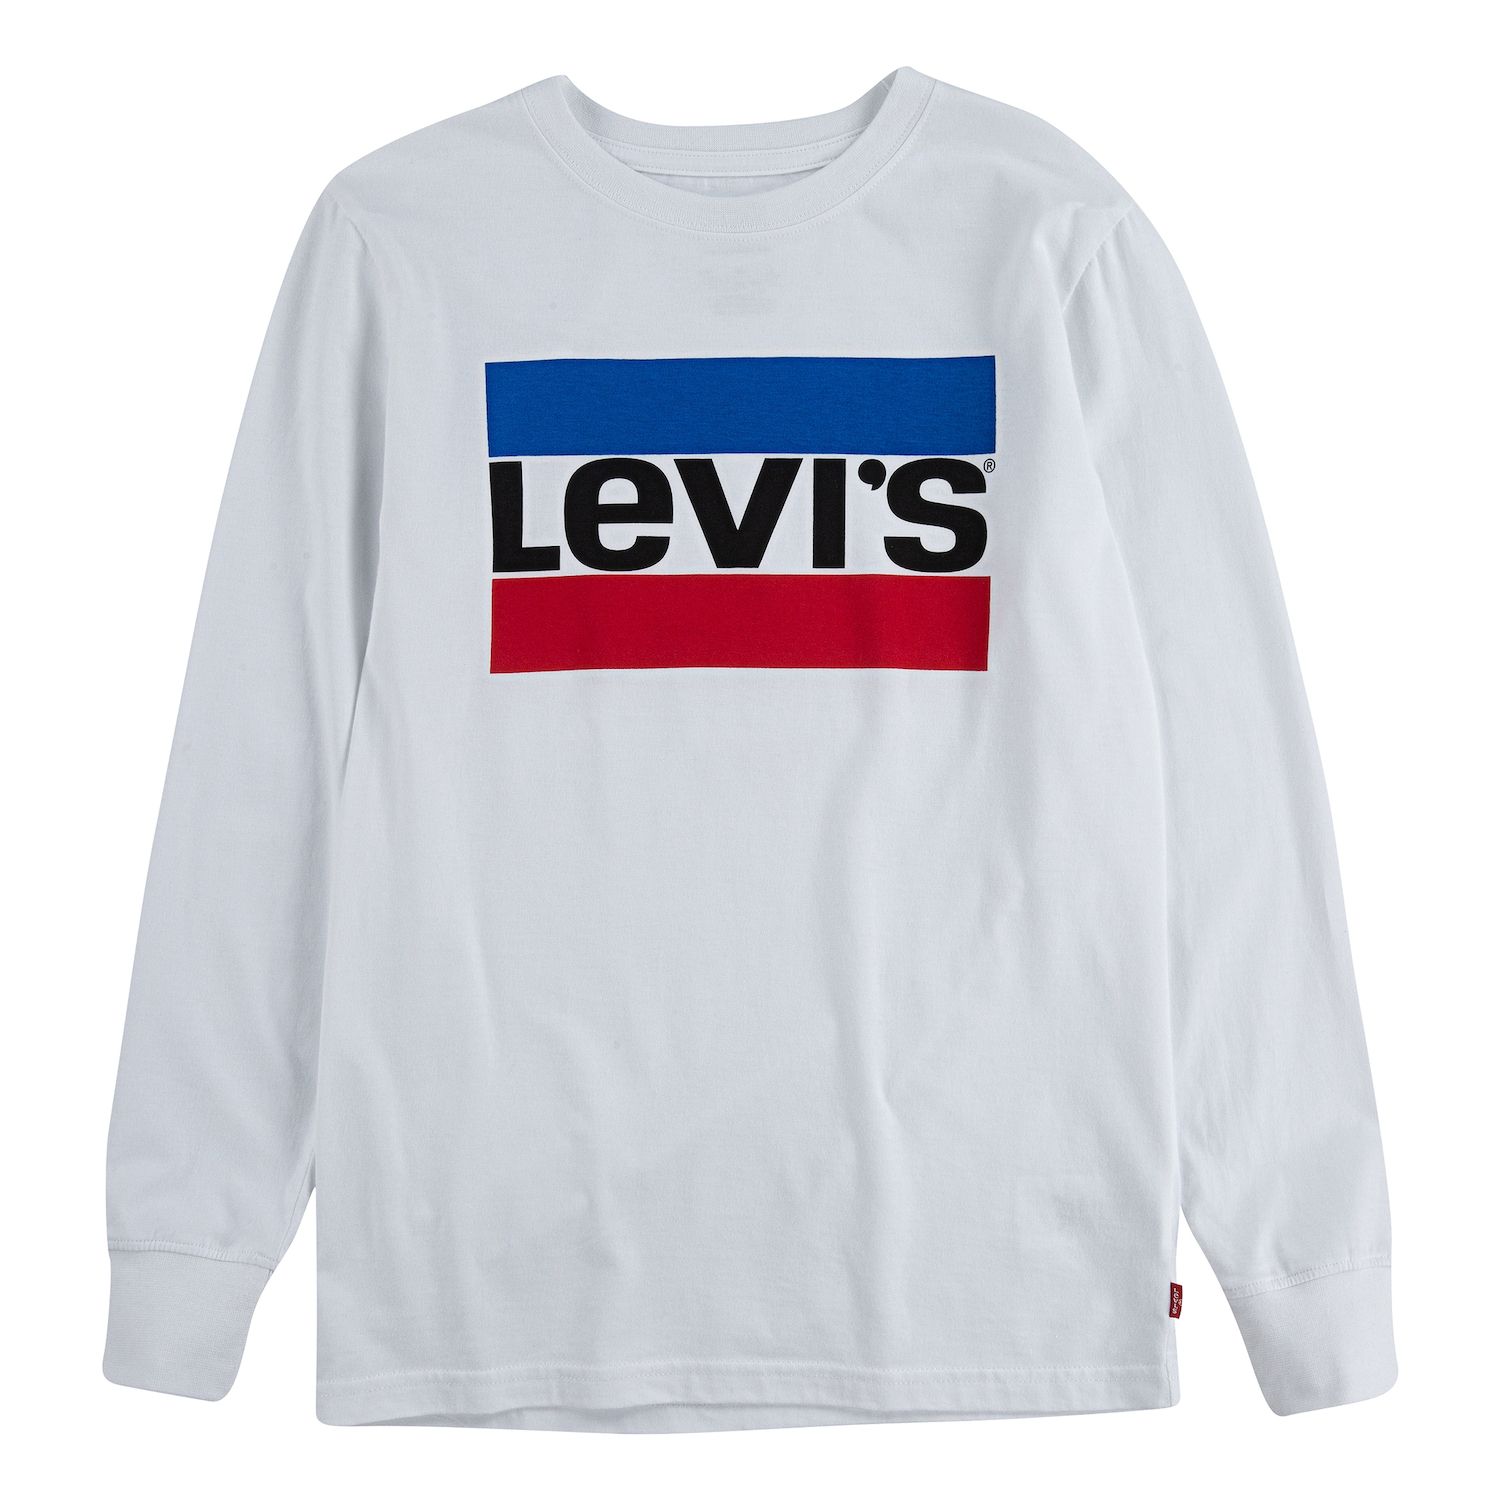 levis t shirts full sleeve